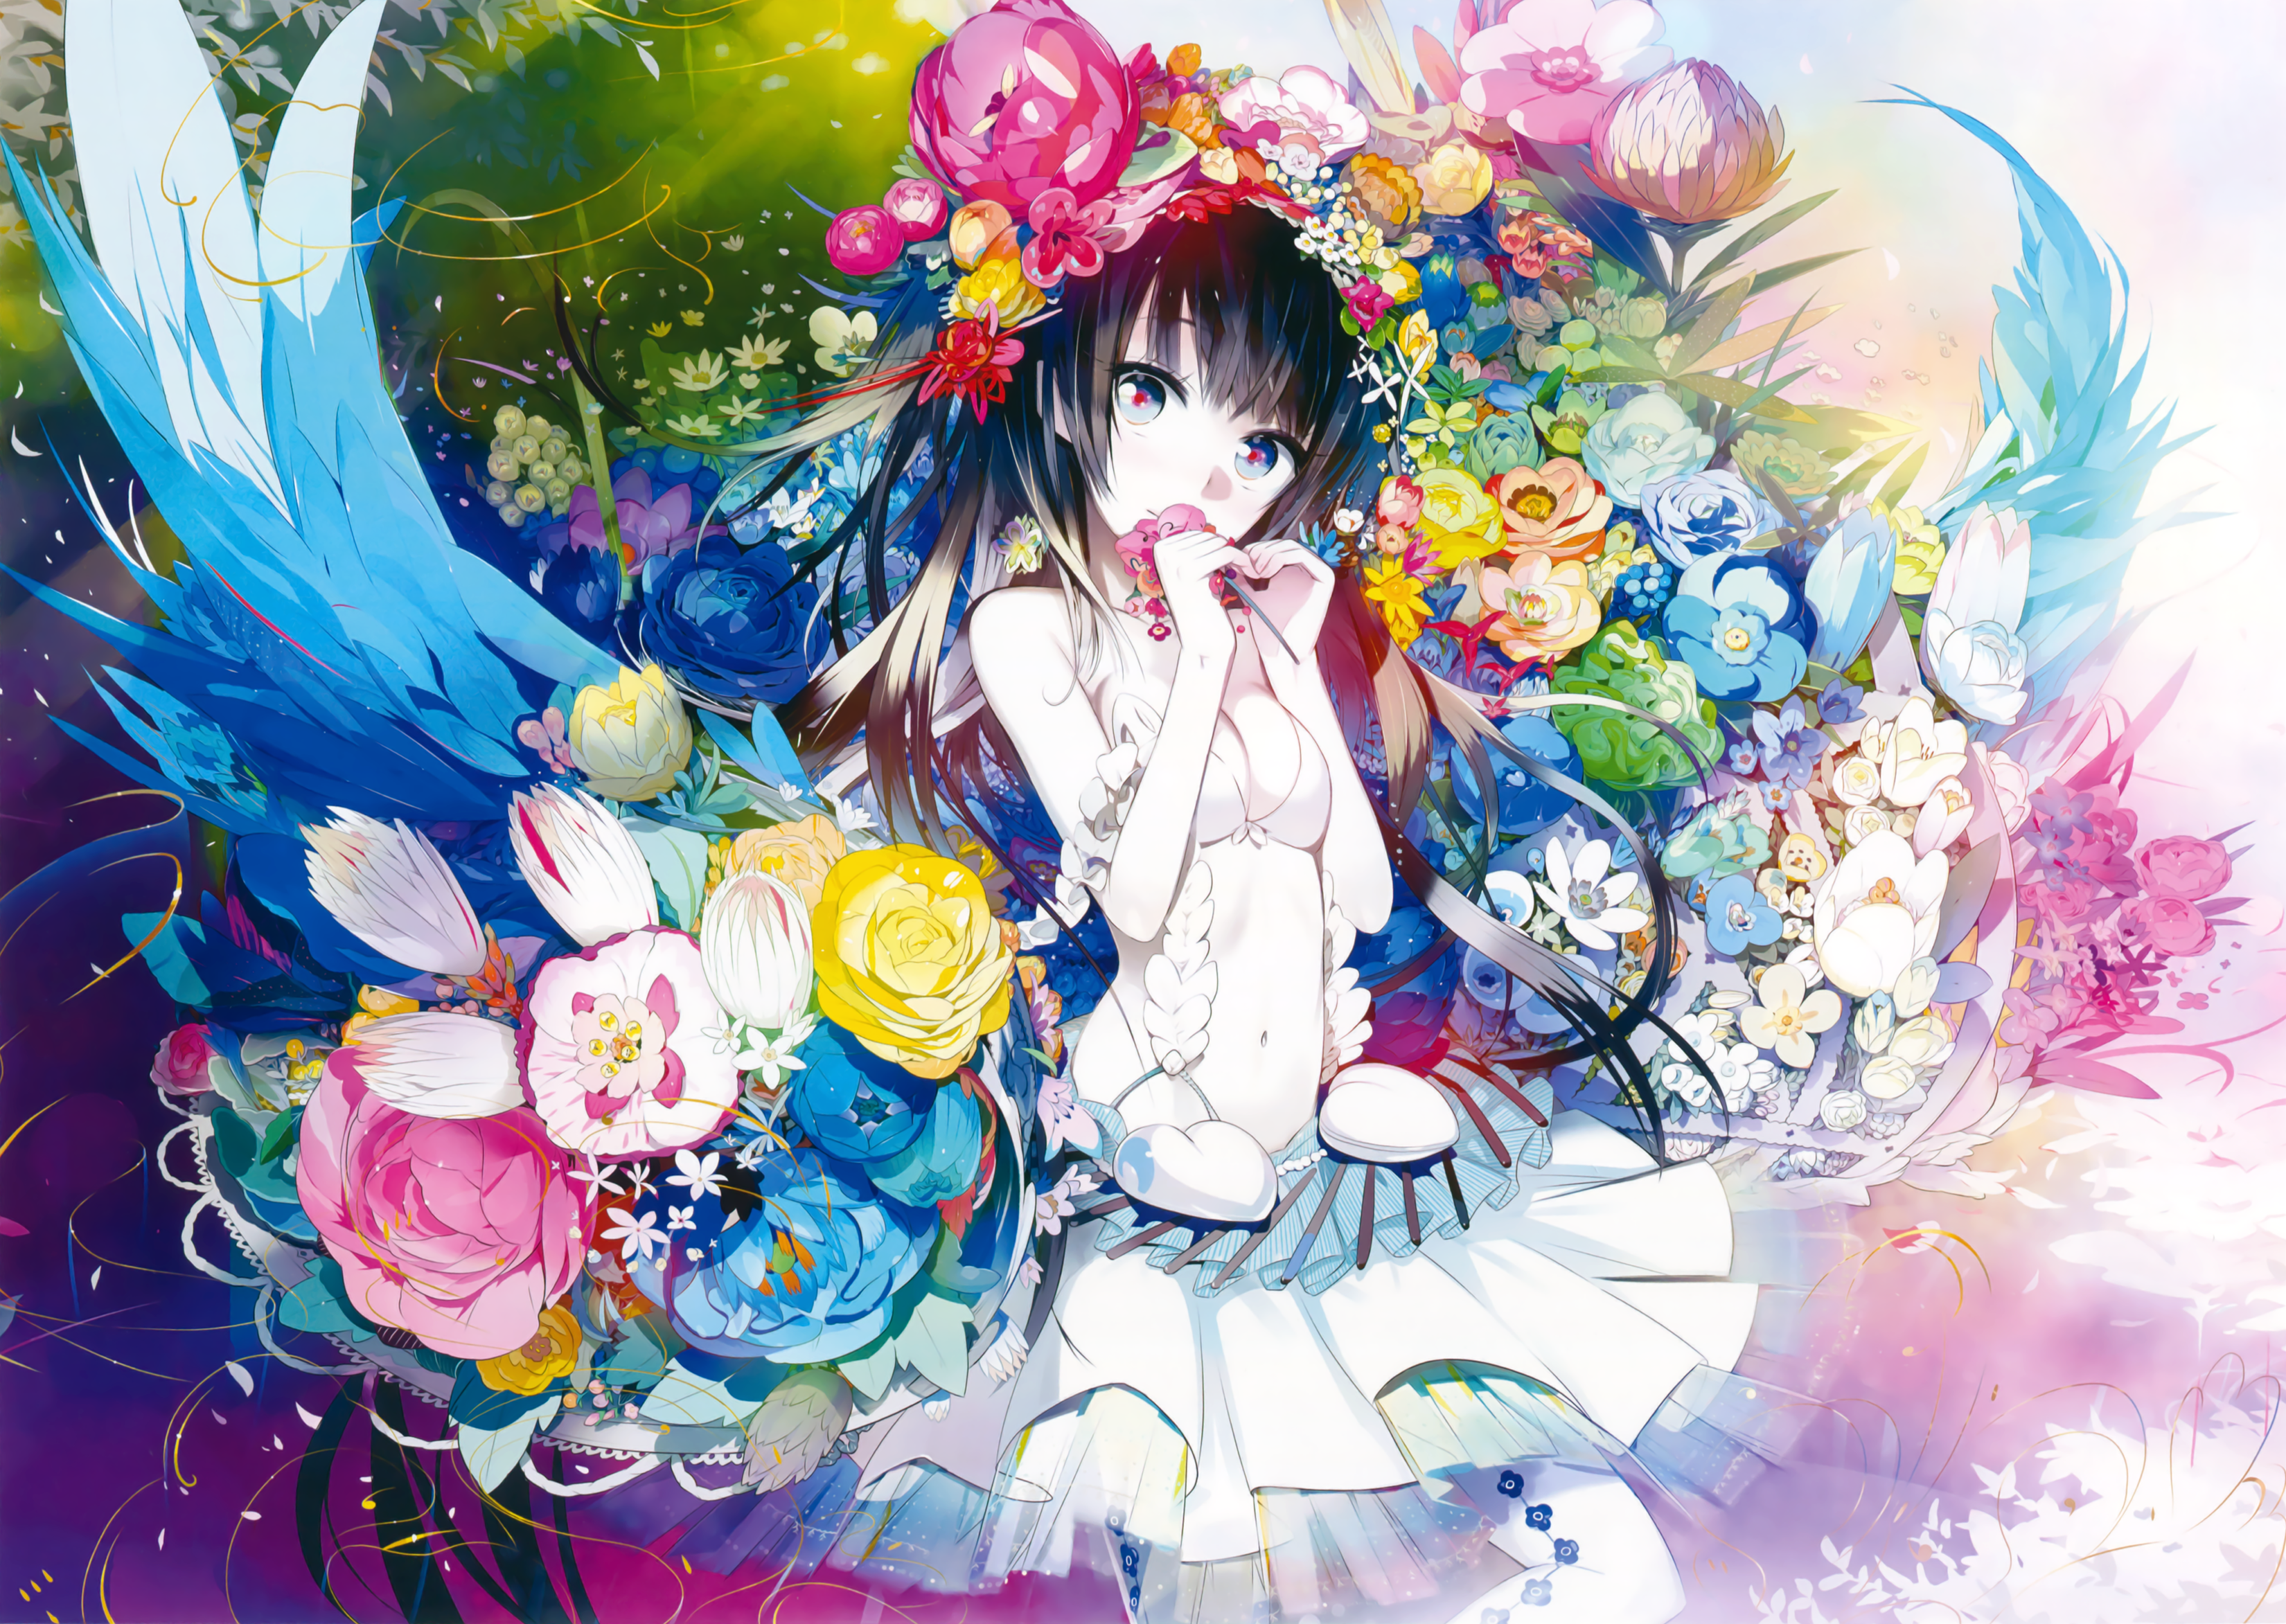 Anime Flower Girl 高清壁纸 | 桌面背景 | 3300x2345 | ID:1054634 - Wallpaper Abyss